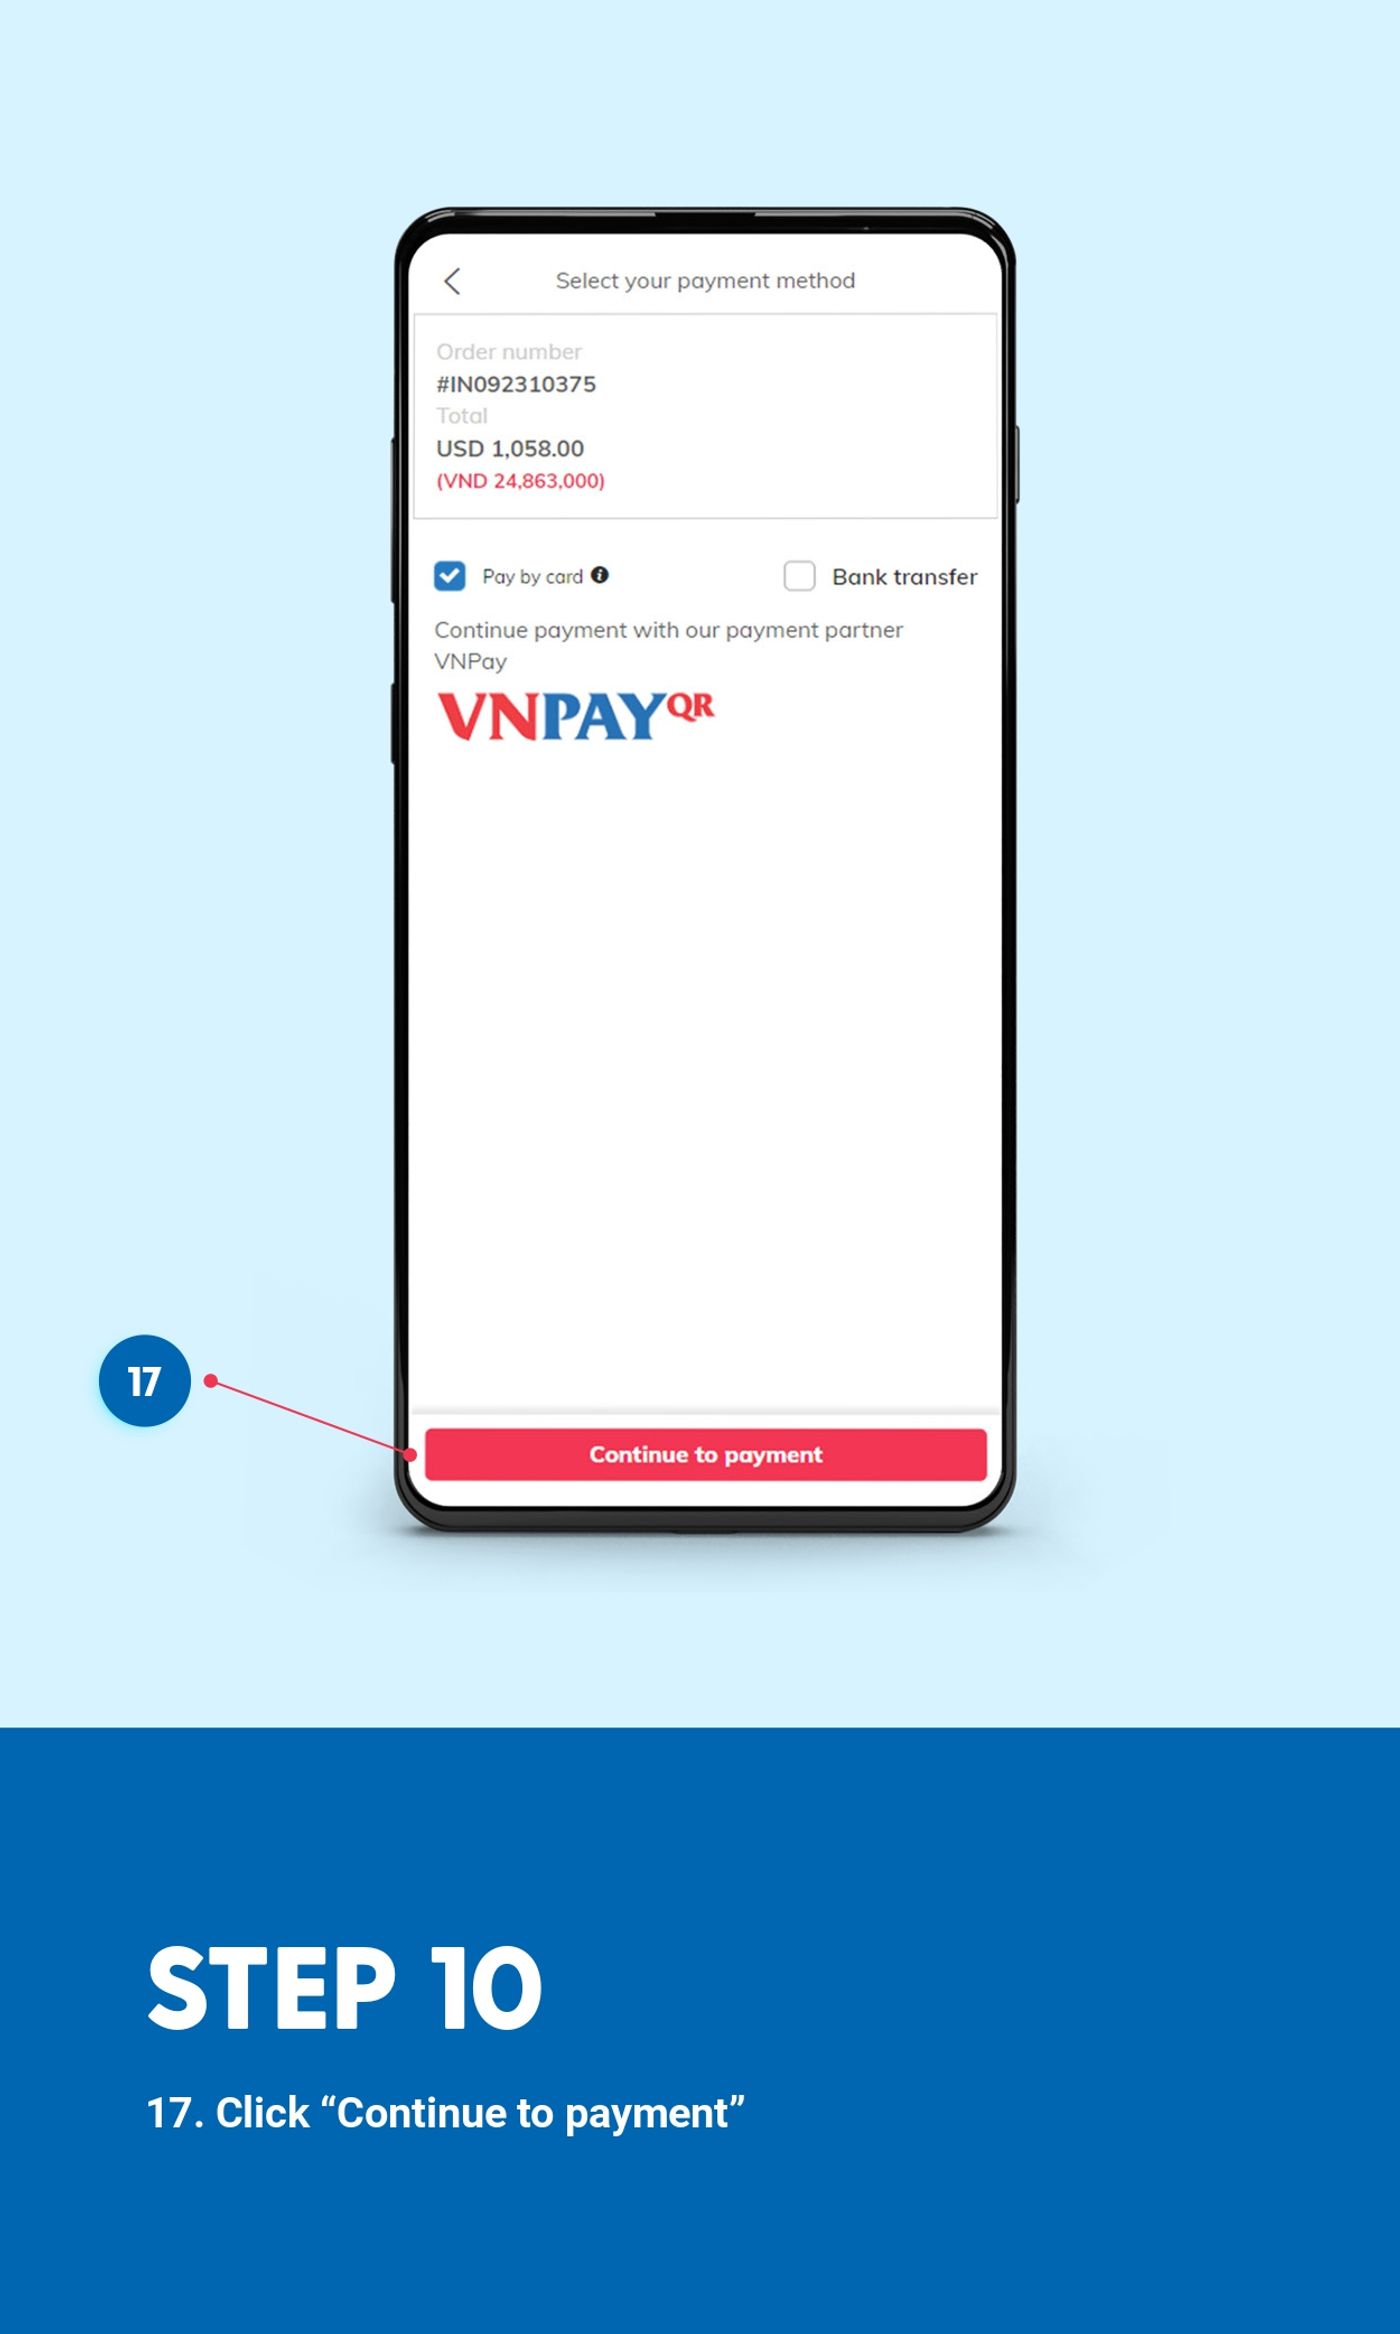 Vietravelasia.com Mobile Payment Guidelines